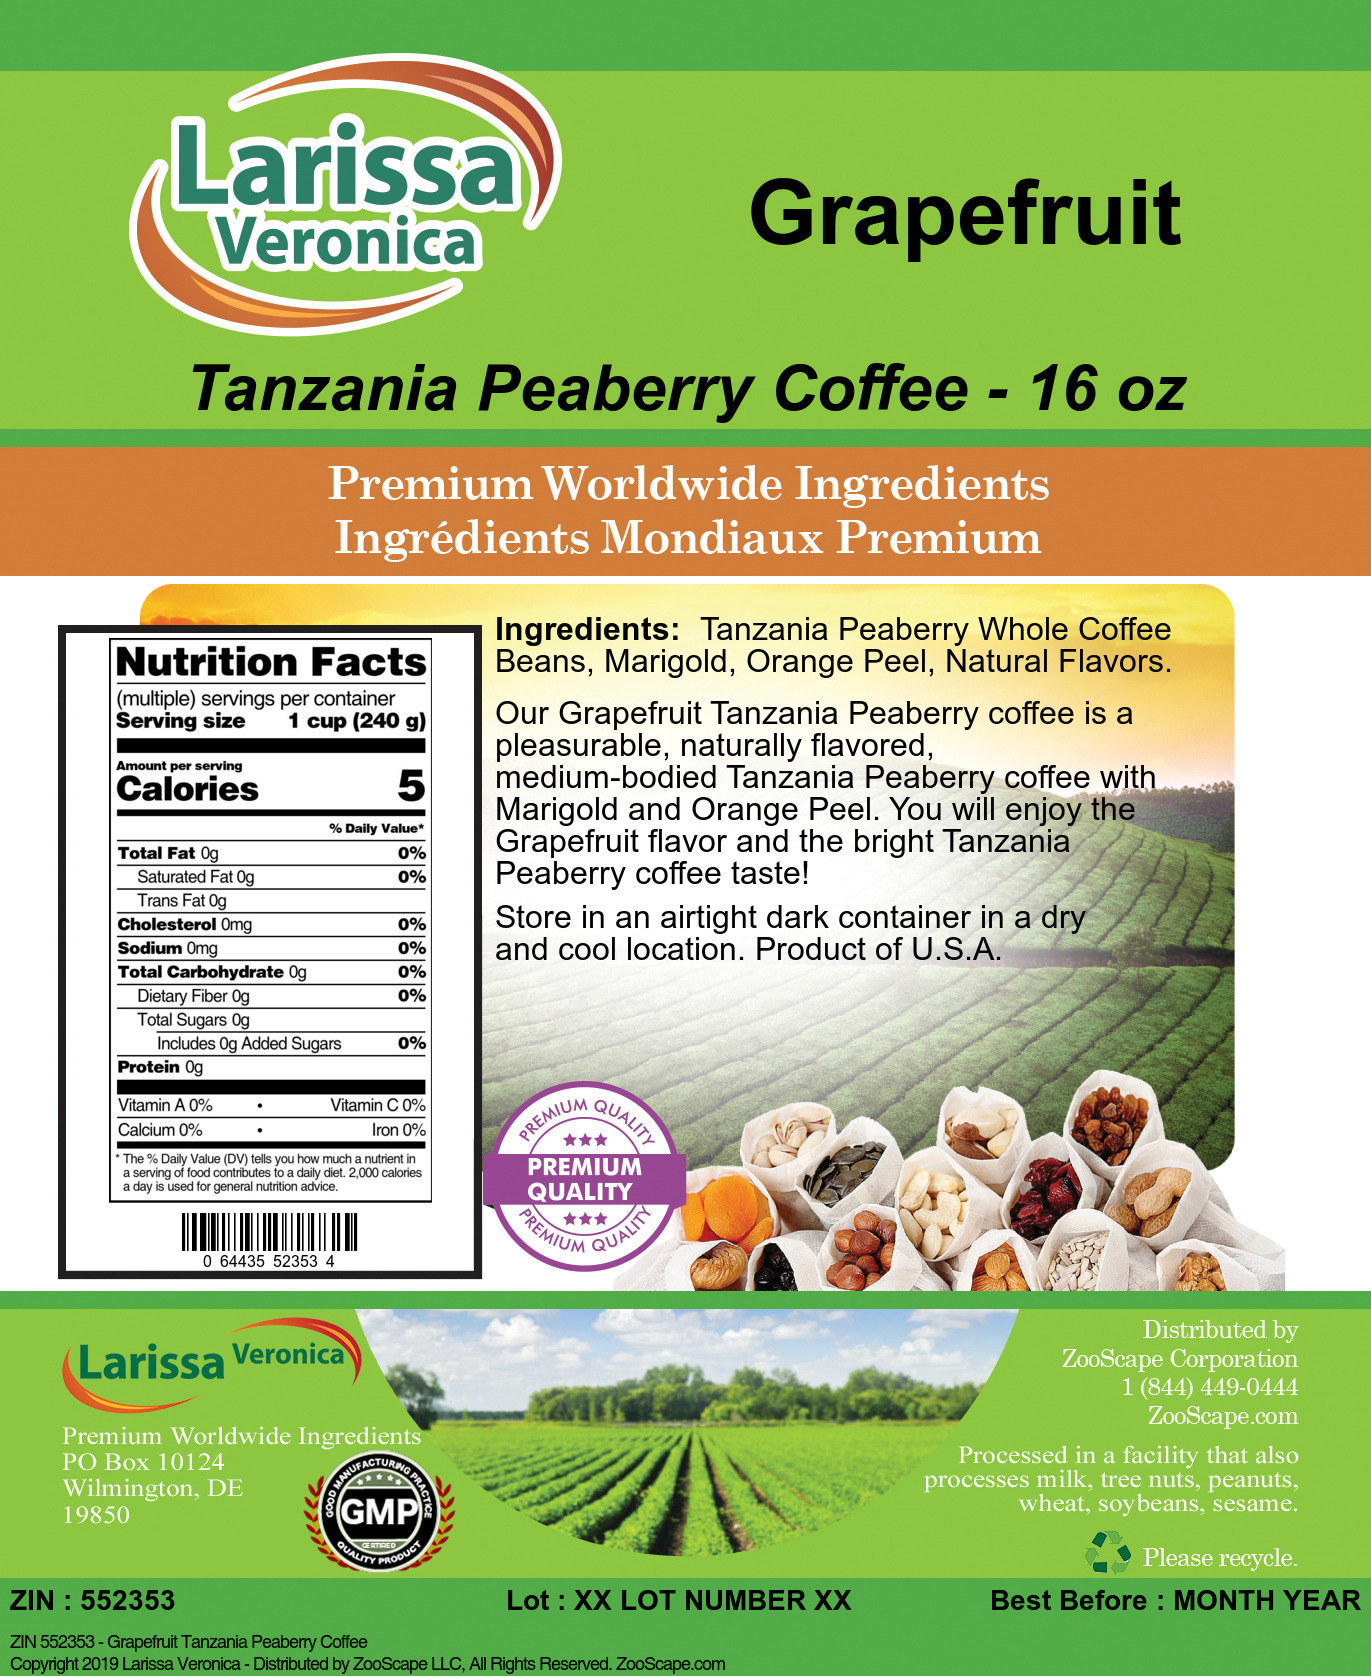 Grapefruit Tanzania Peaberry Coffee - Label